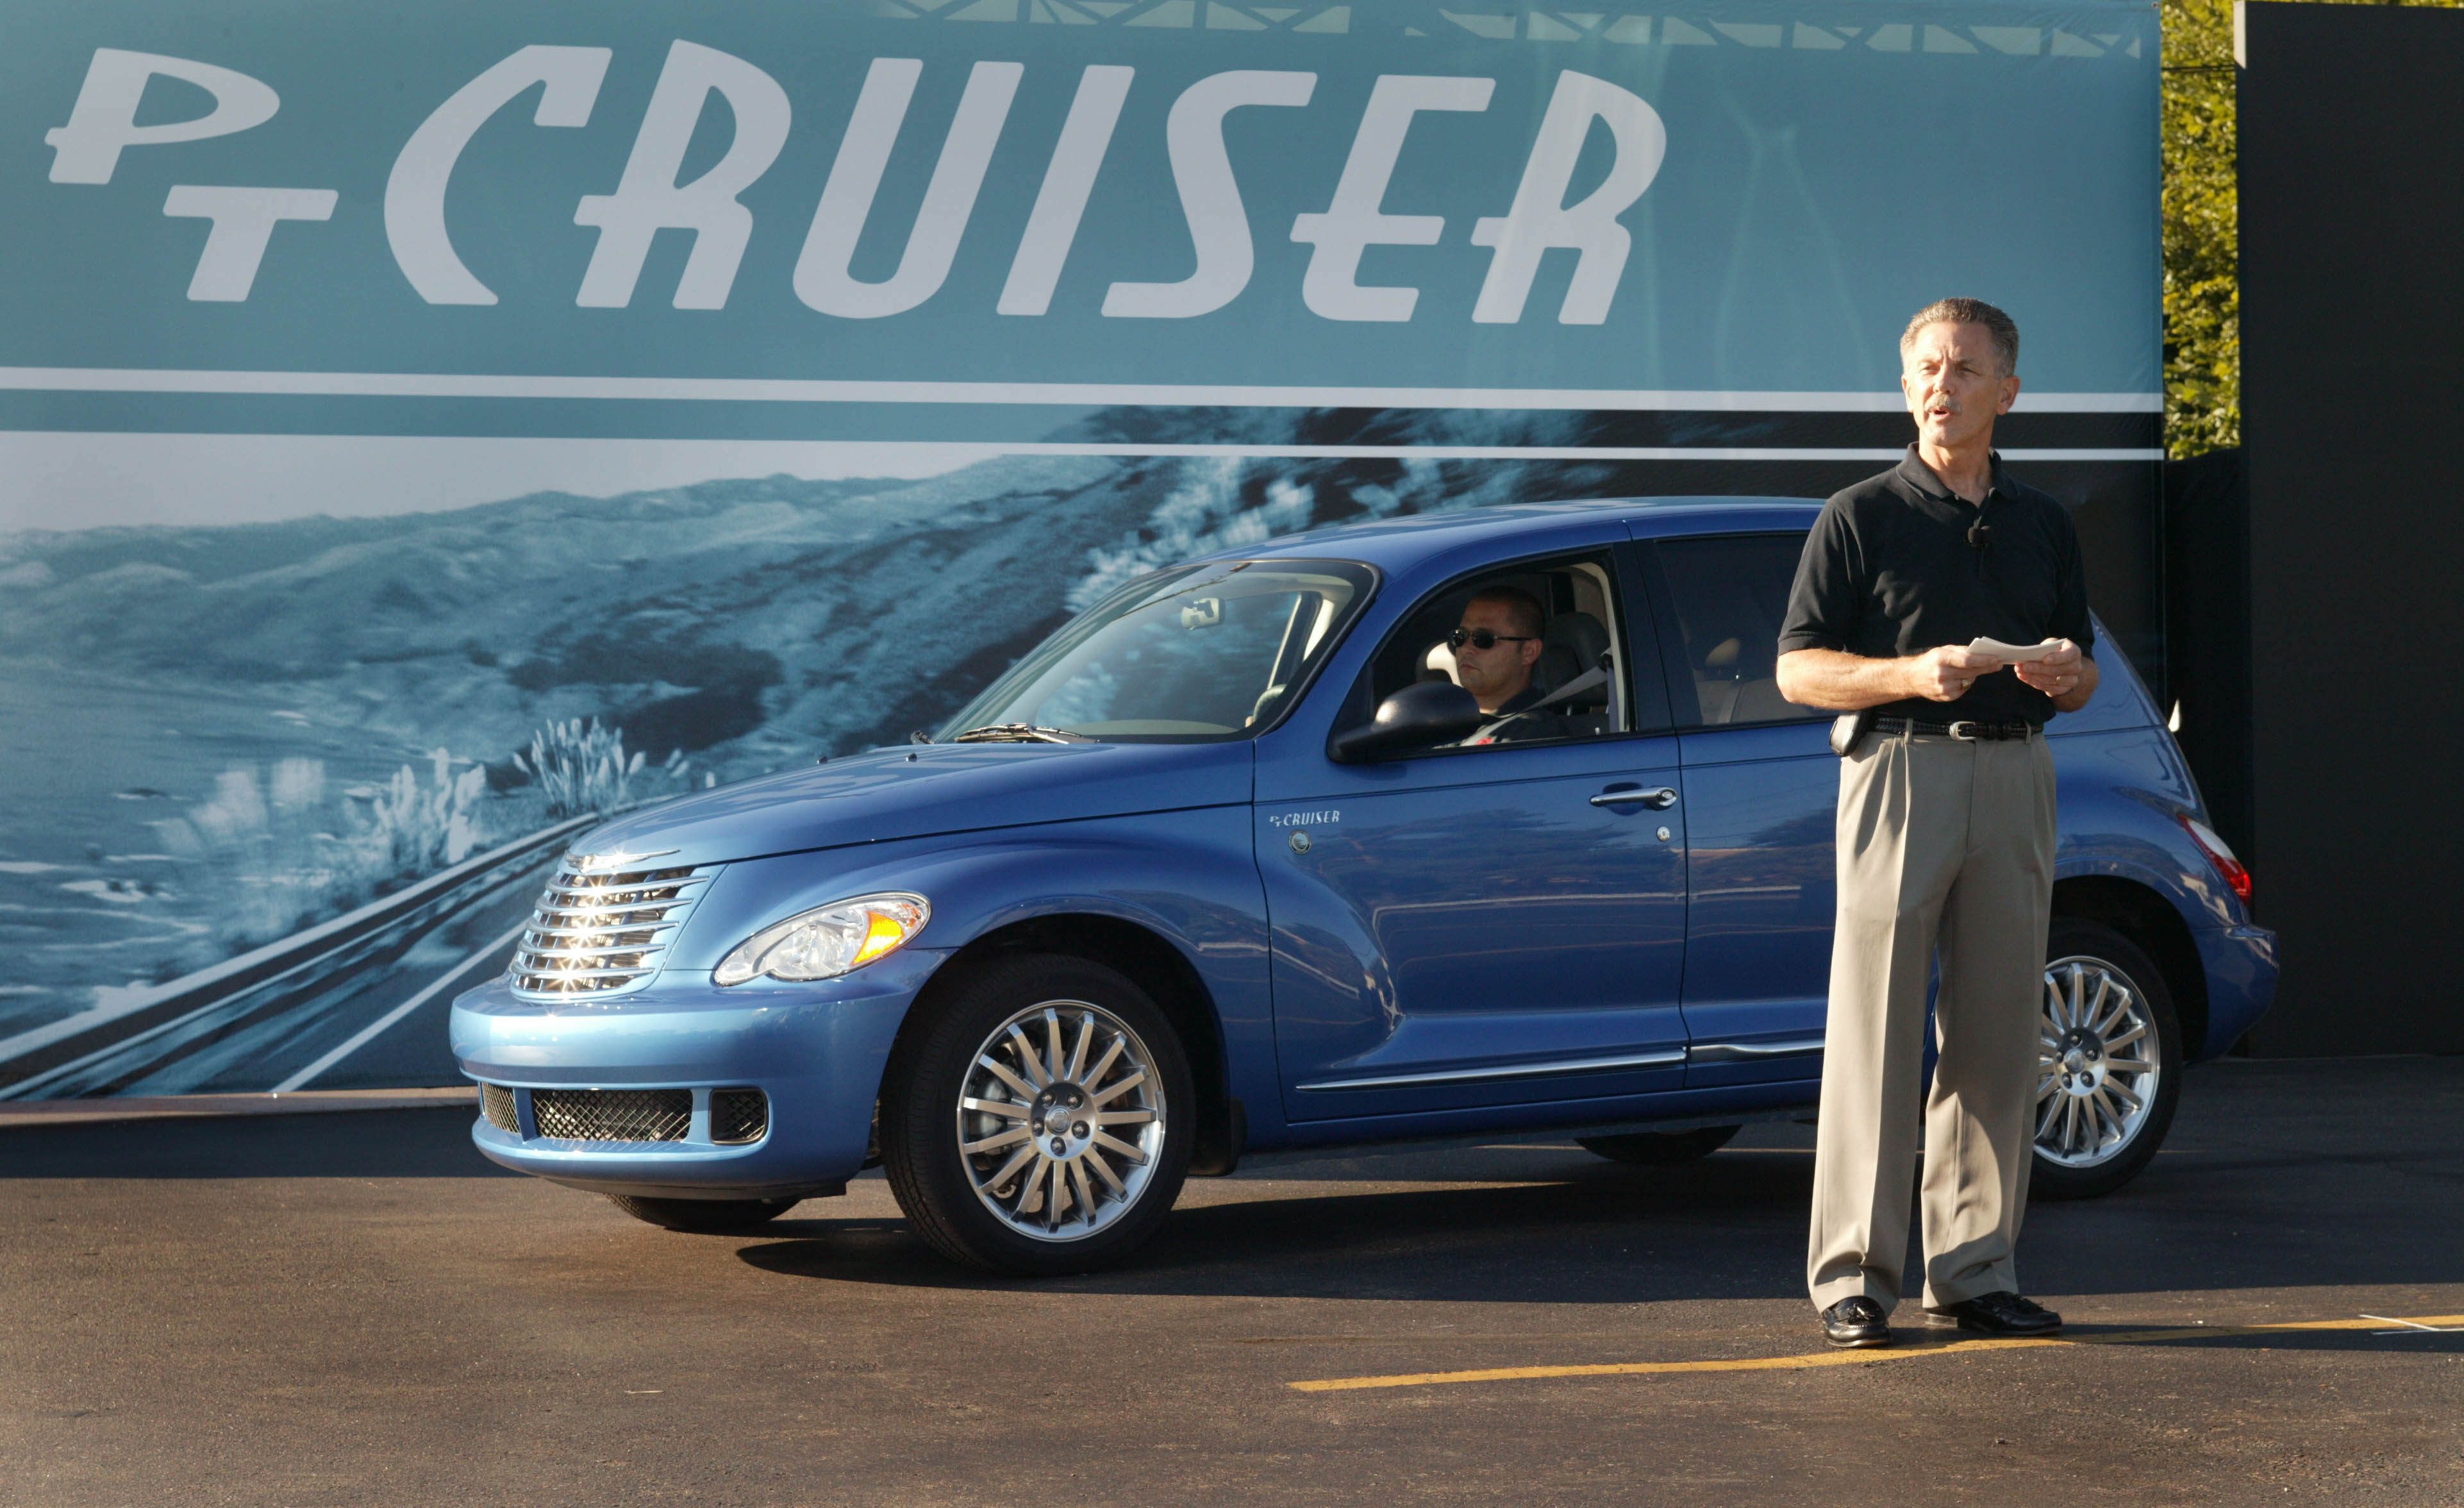 2007 Chrysler PT Street Cruiser Pacific Coast Highway Edition